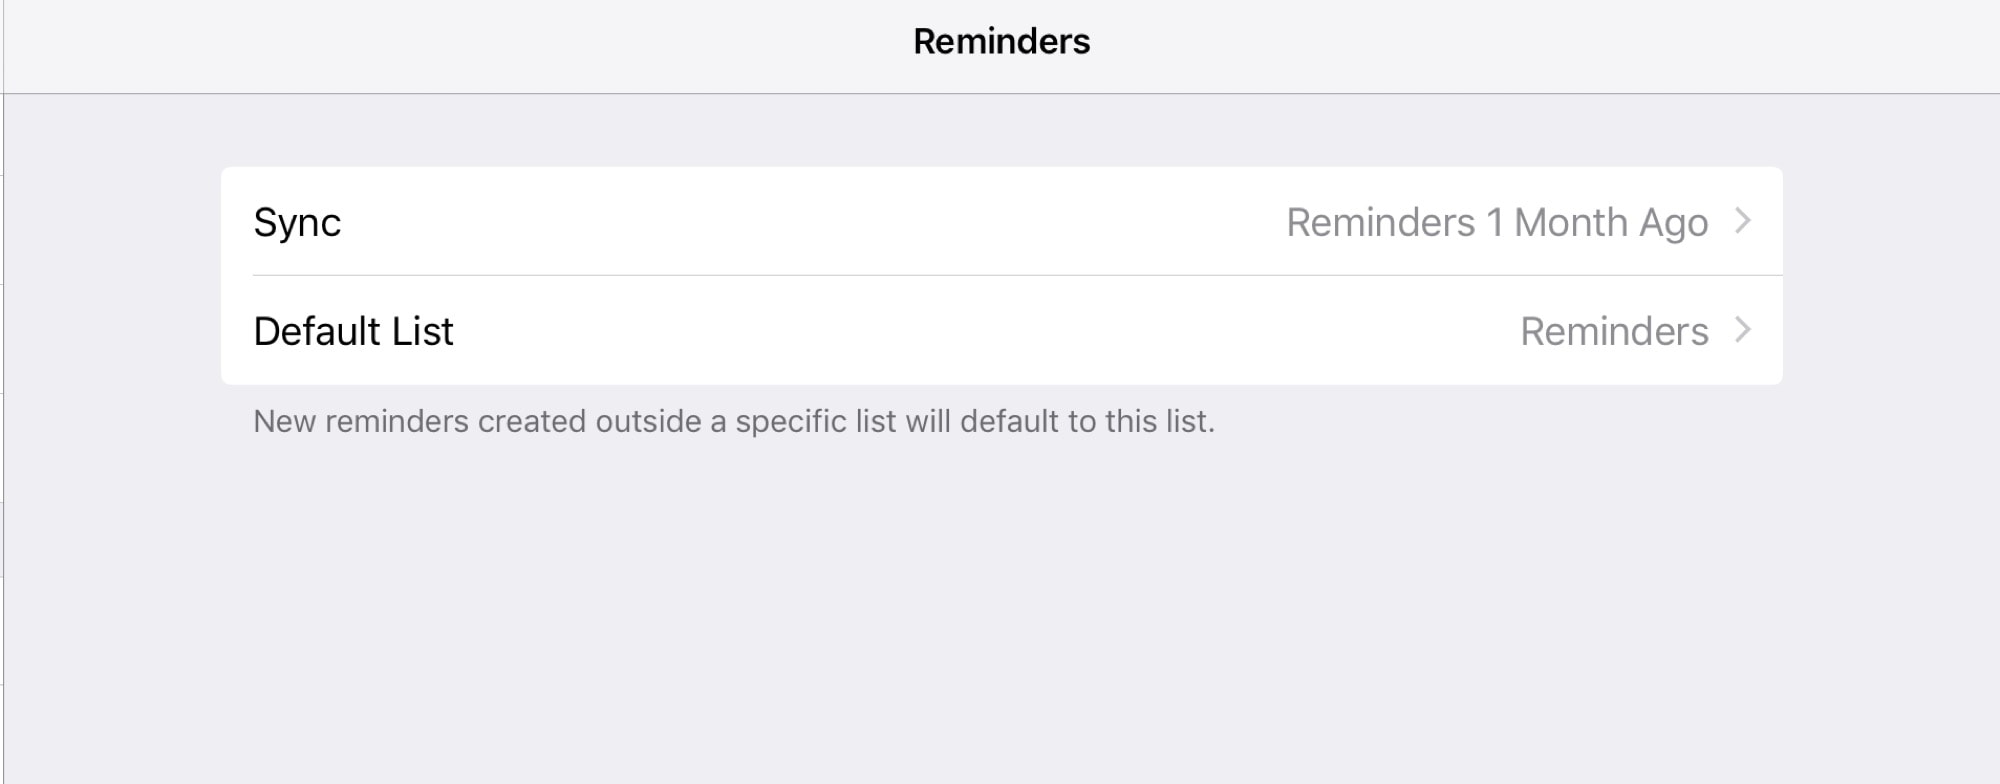 iOS 12's pitiful preference settings.